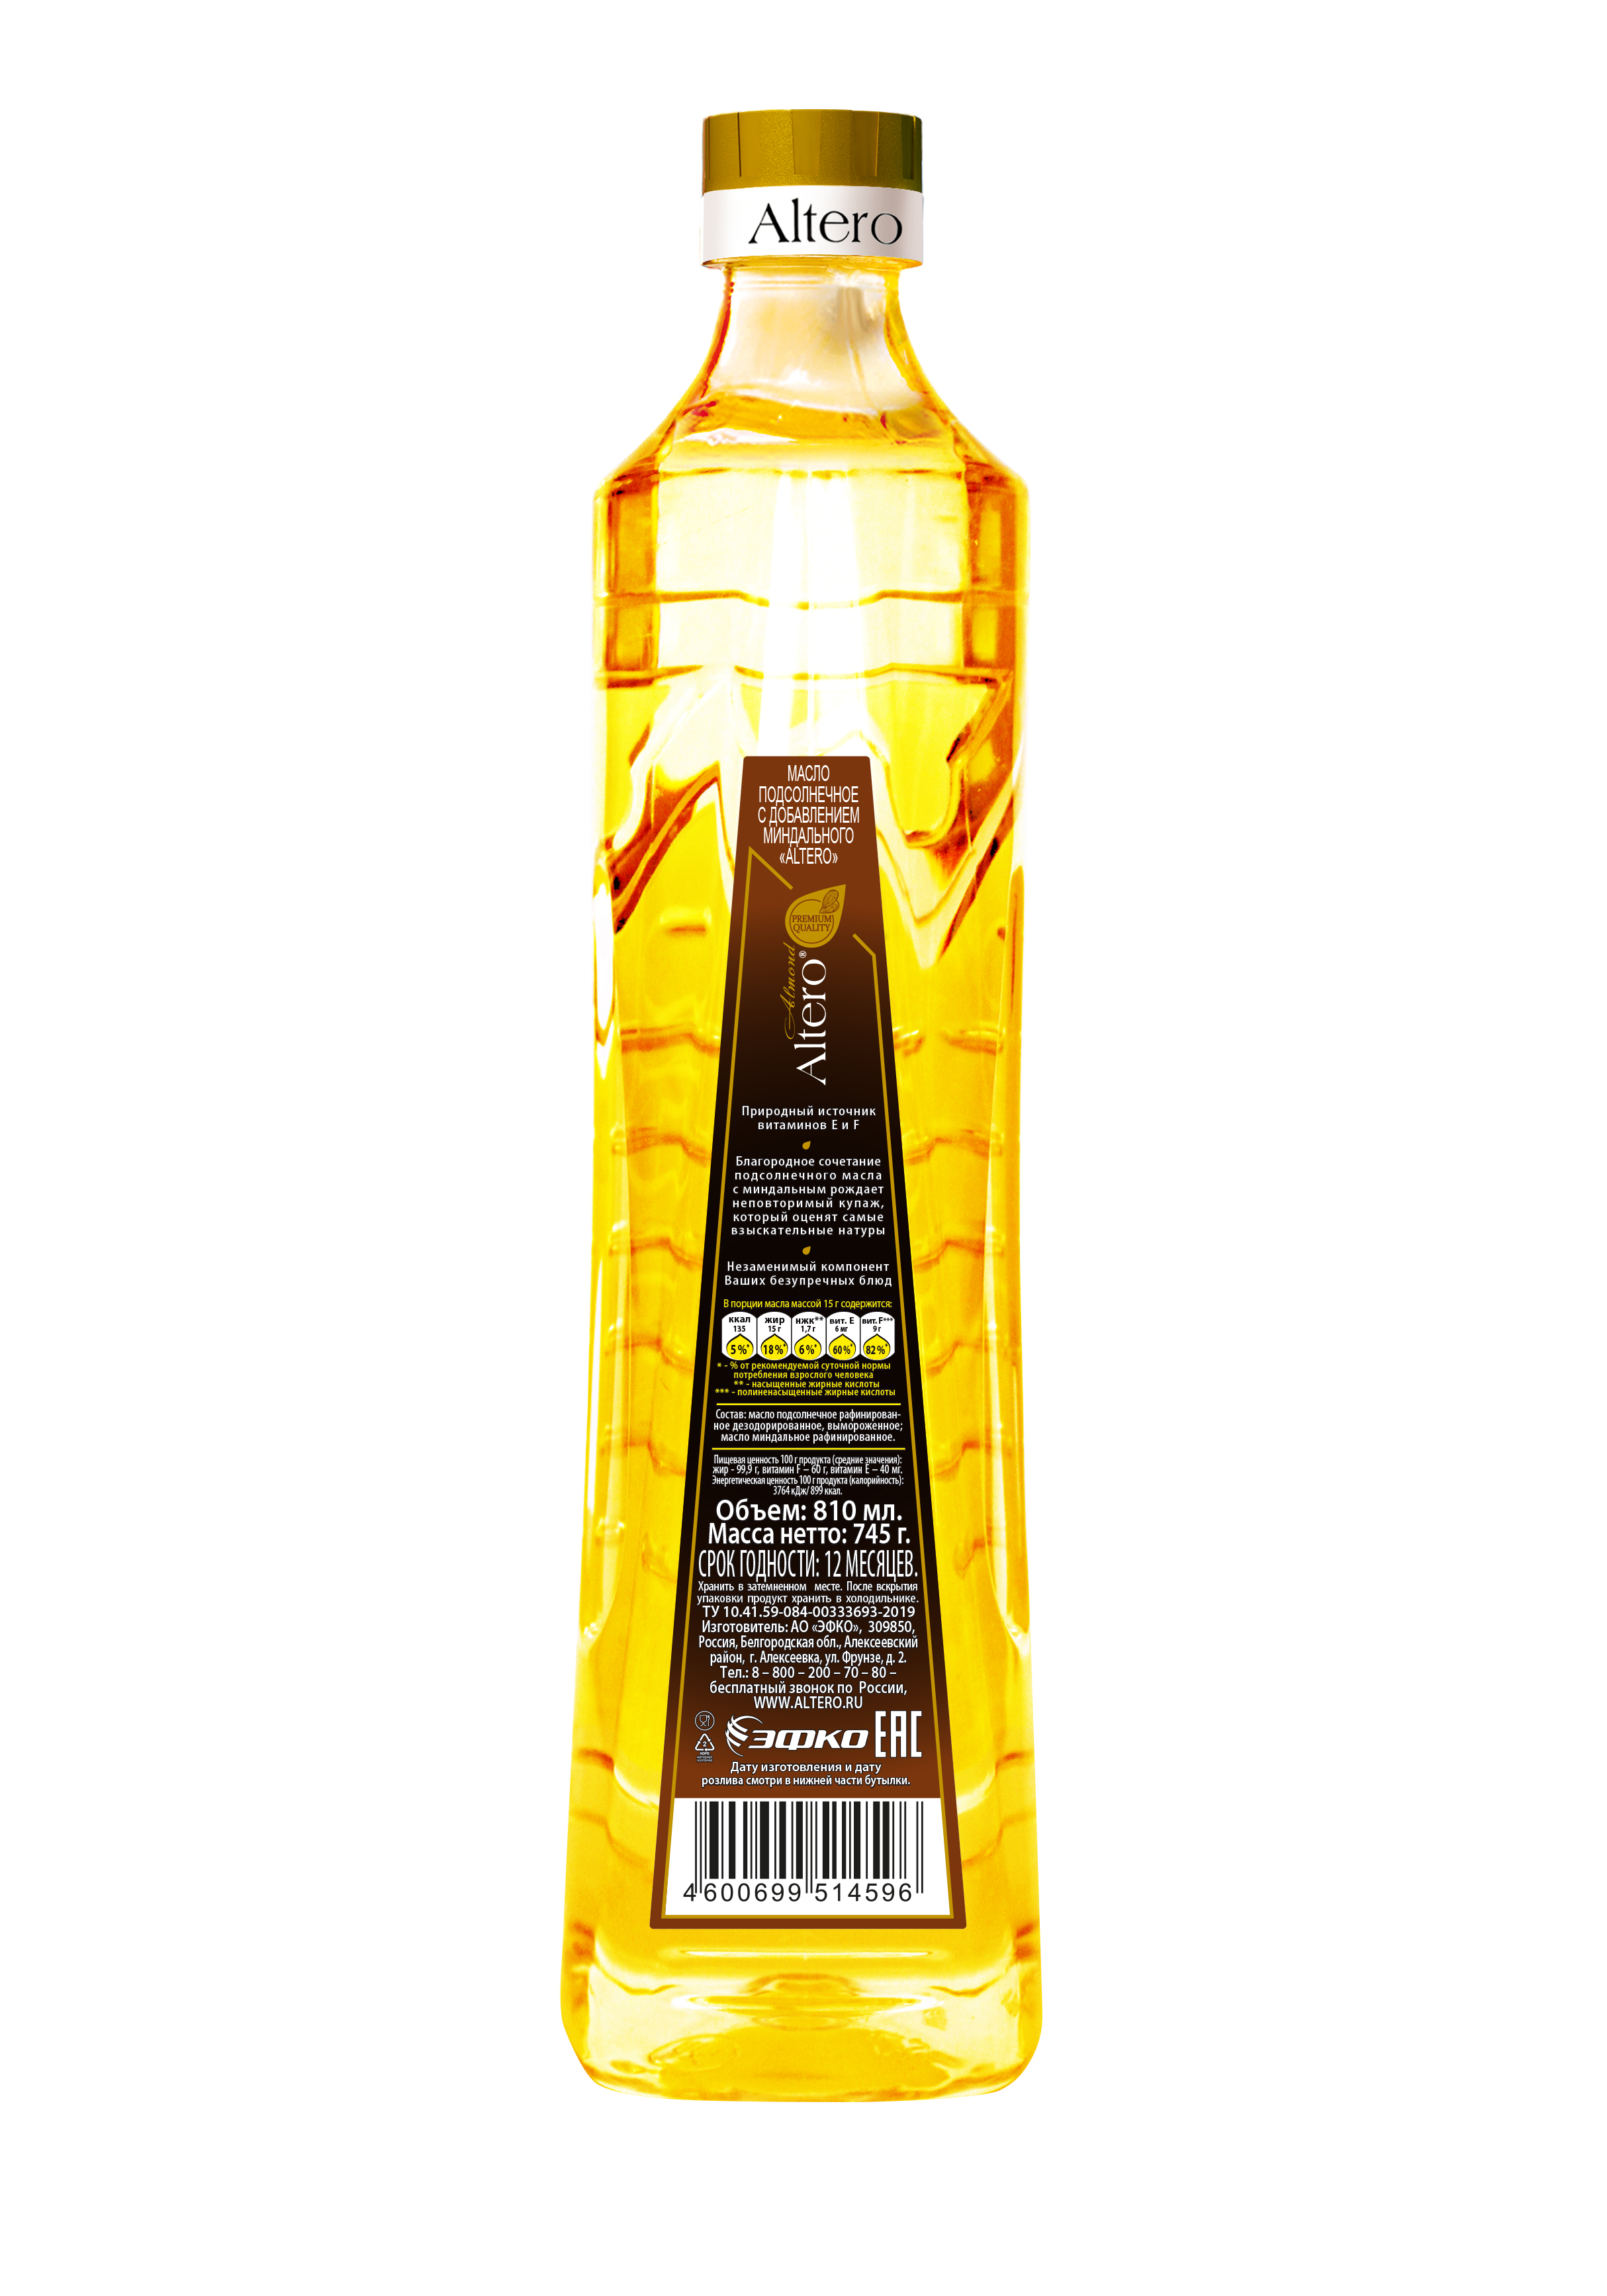 фото Подсолнечное масло altero с экстрактом розмарина и базилика 0,5 л